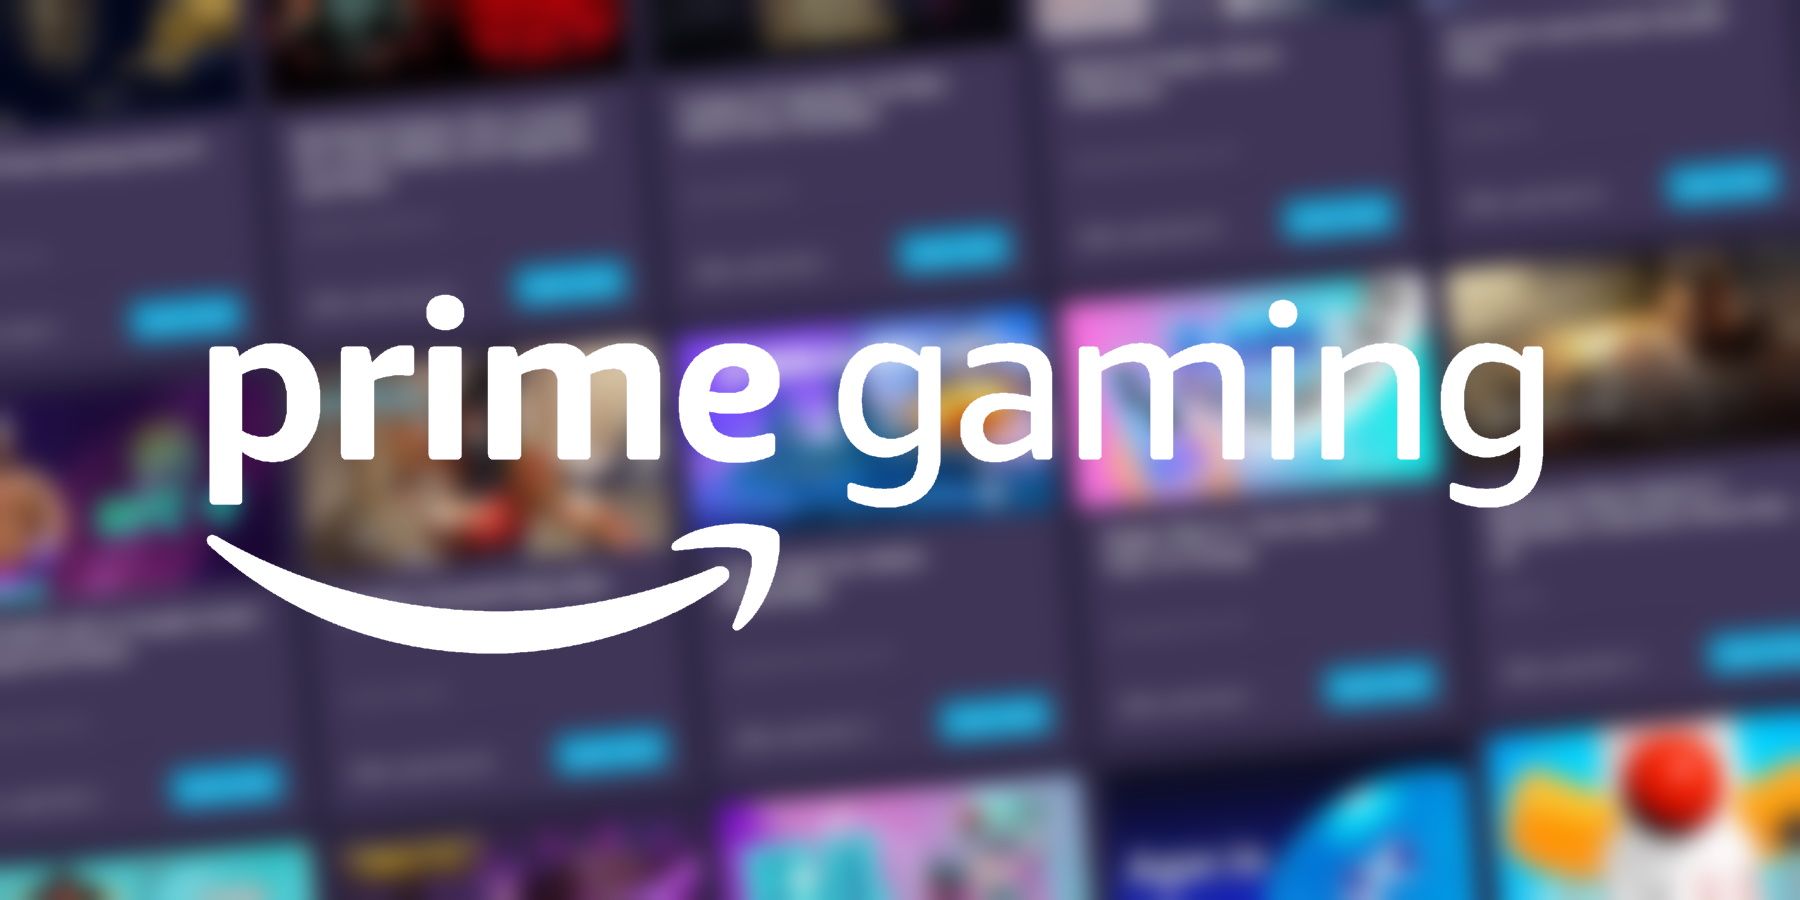 Prime Gaming Reveals September 2022 Offerings